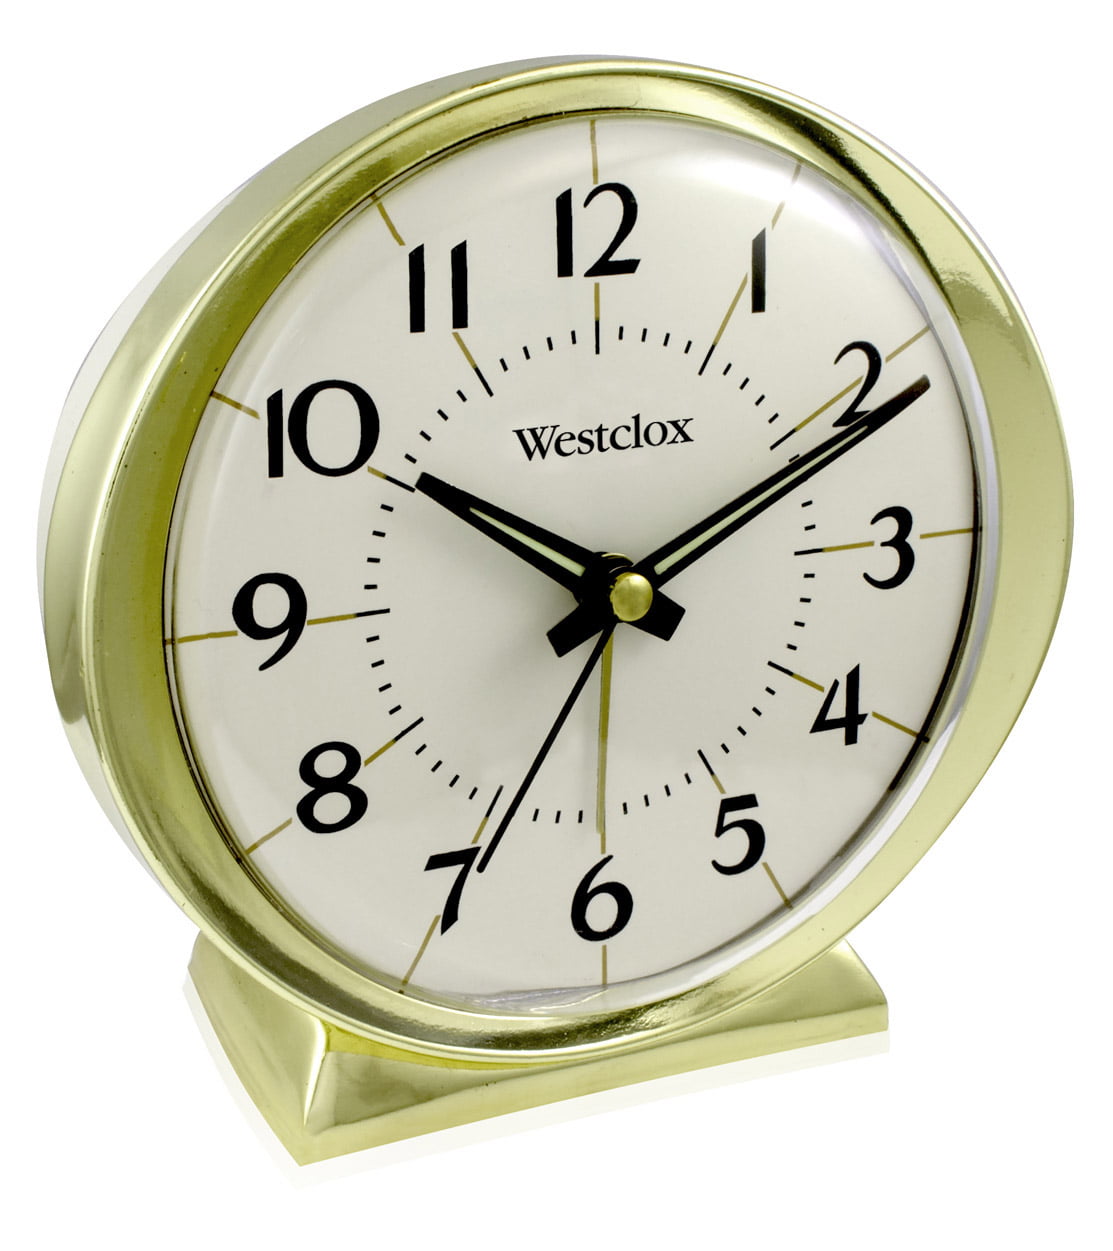 iclock alarm clock